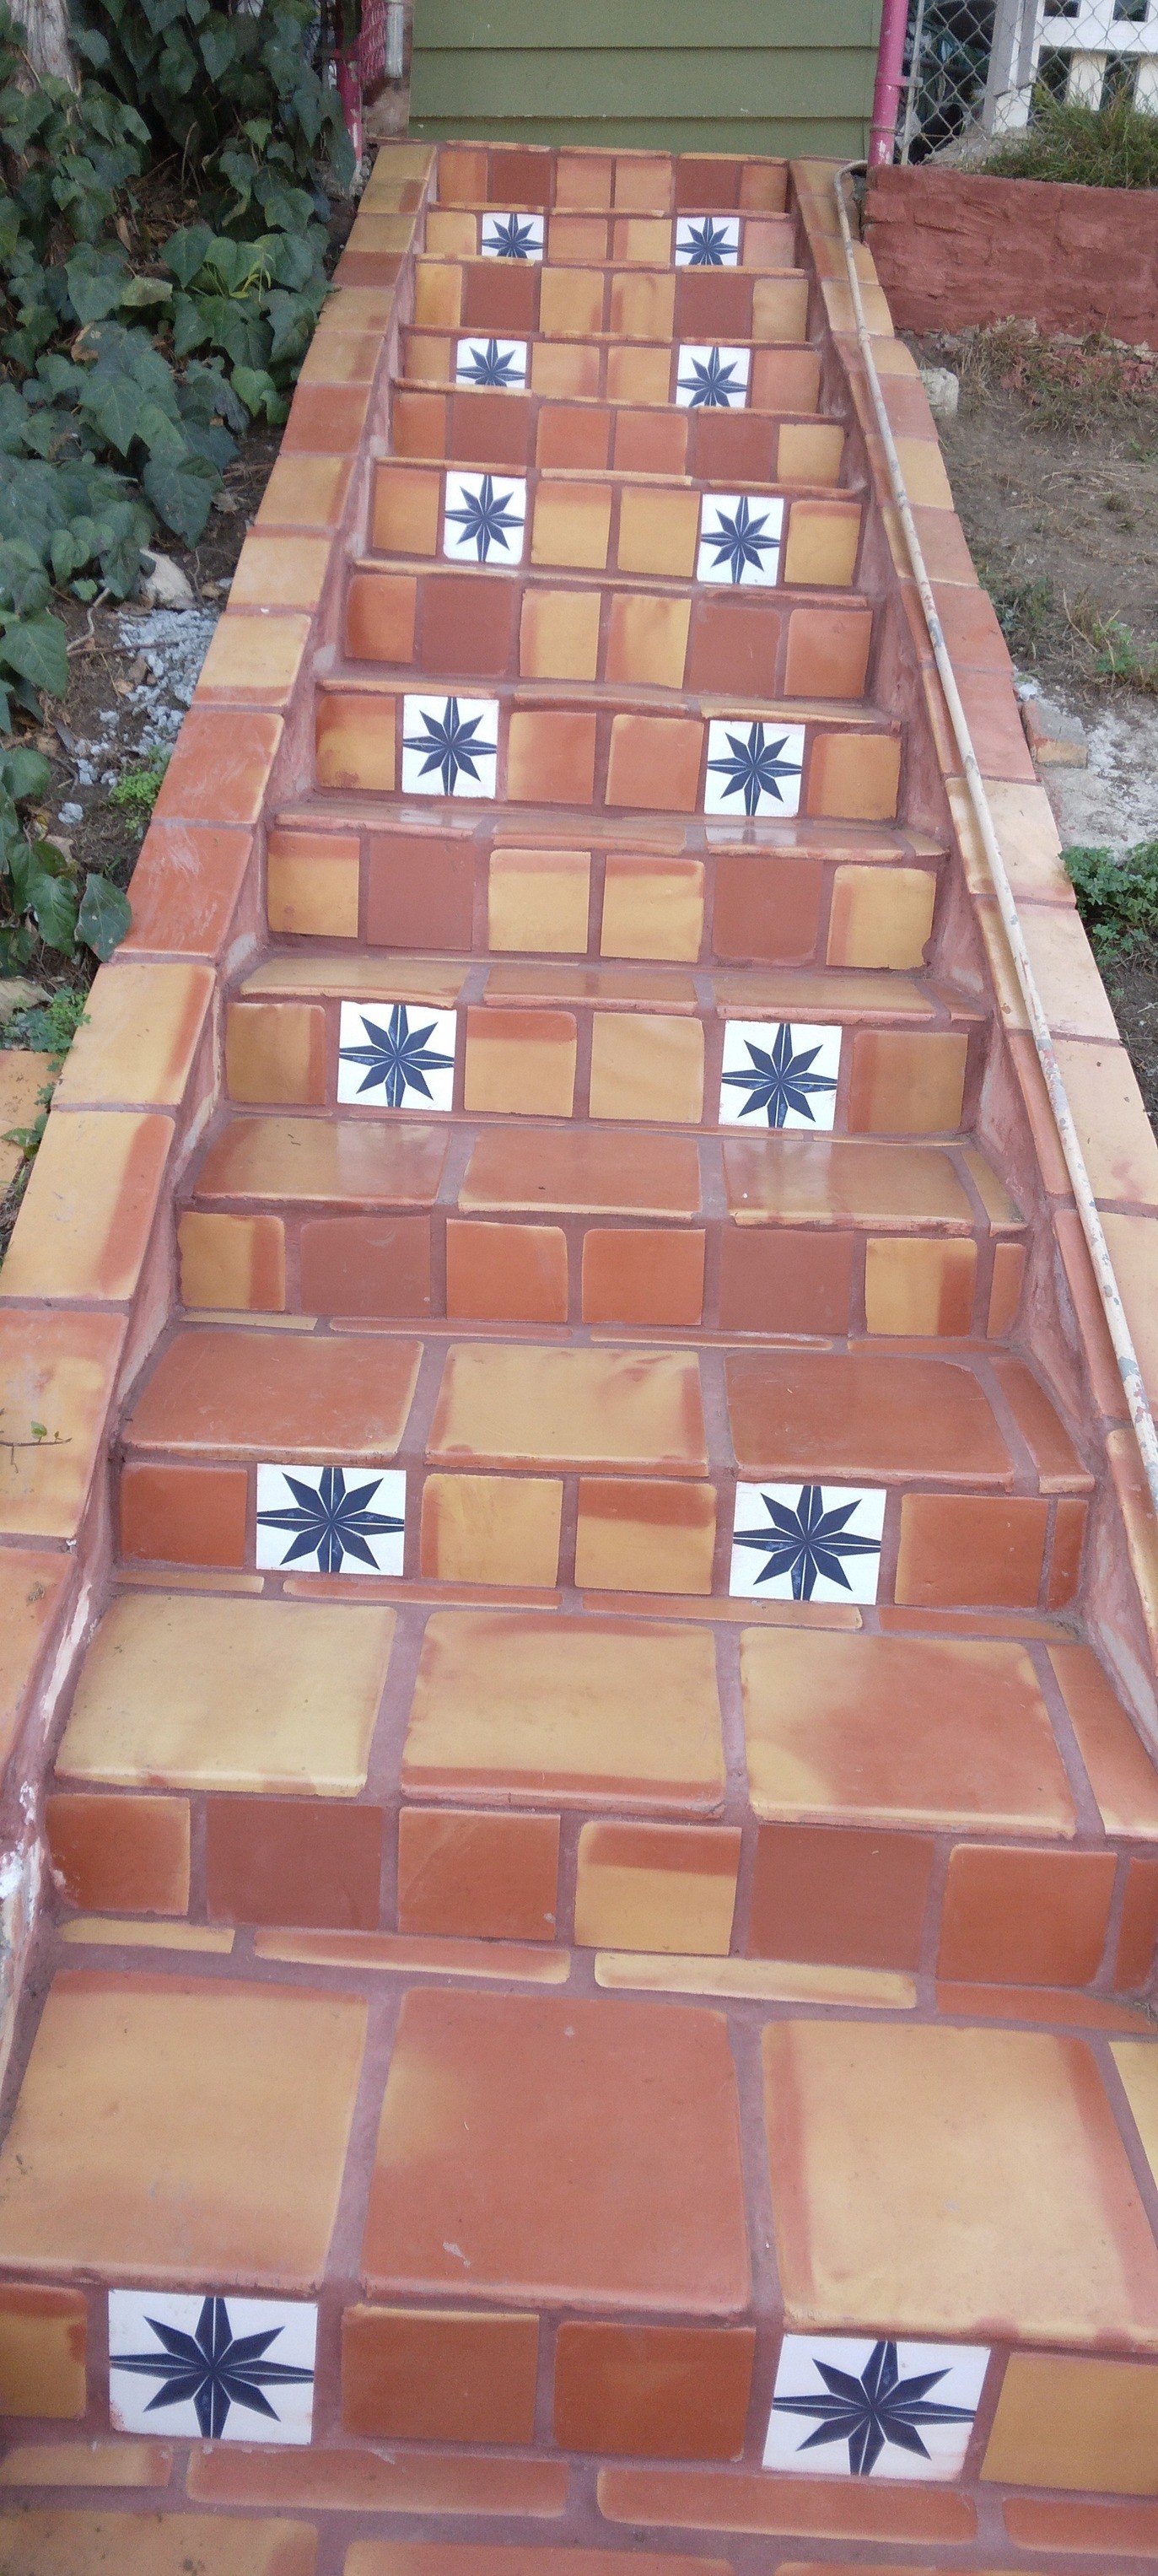 Tile Work J G - Ceramic tiles Tile Work J G Los Angeles (213)471-5399